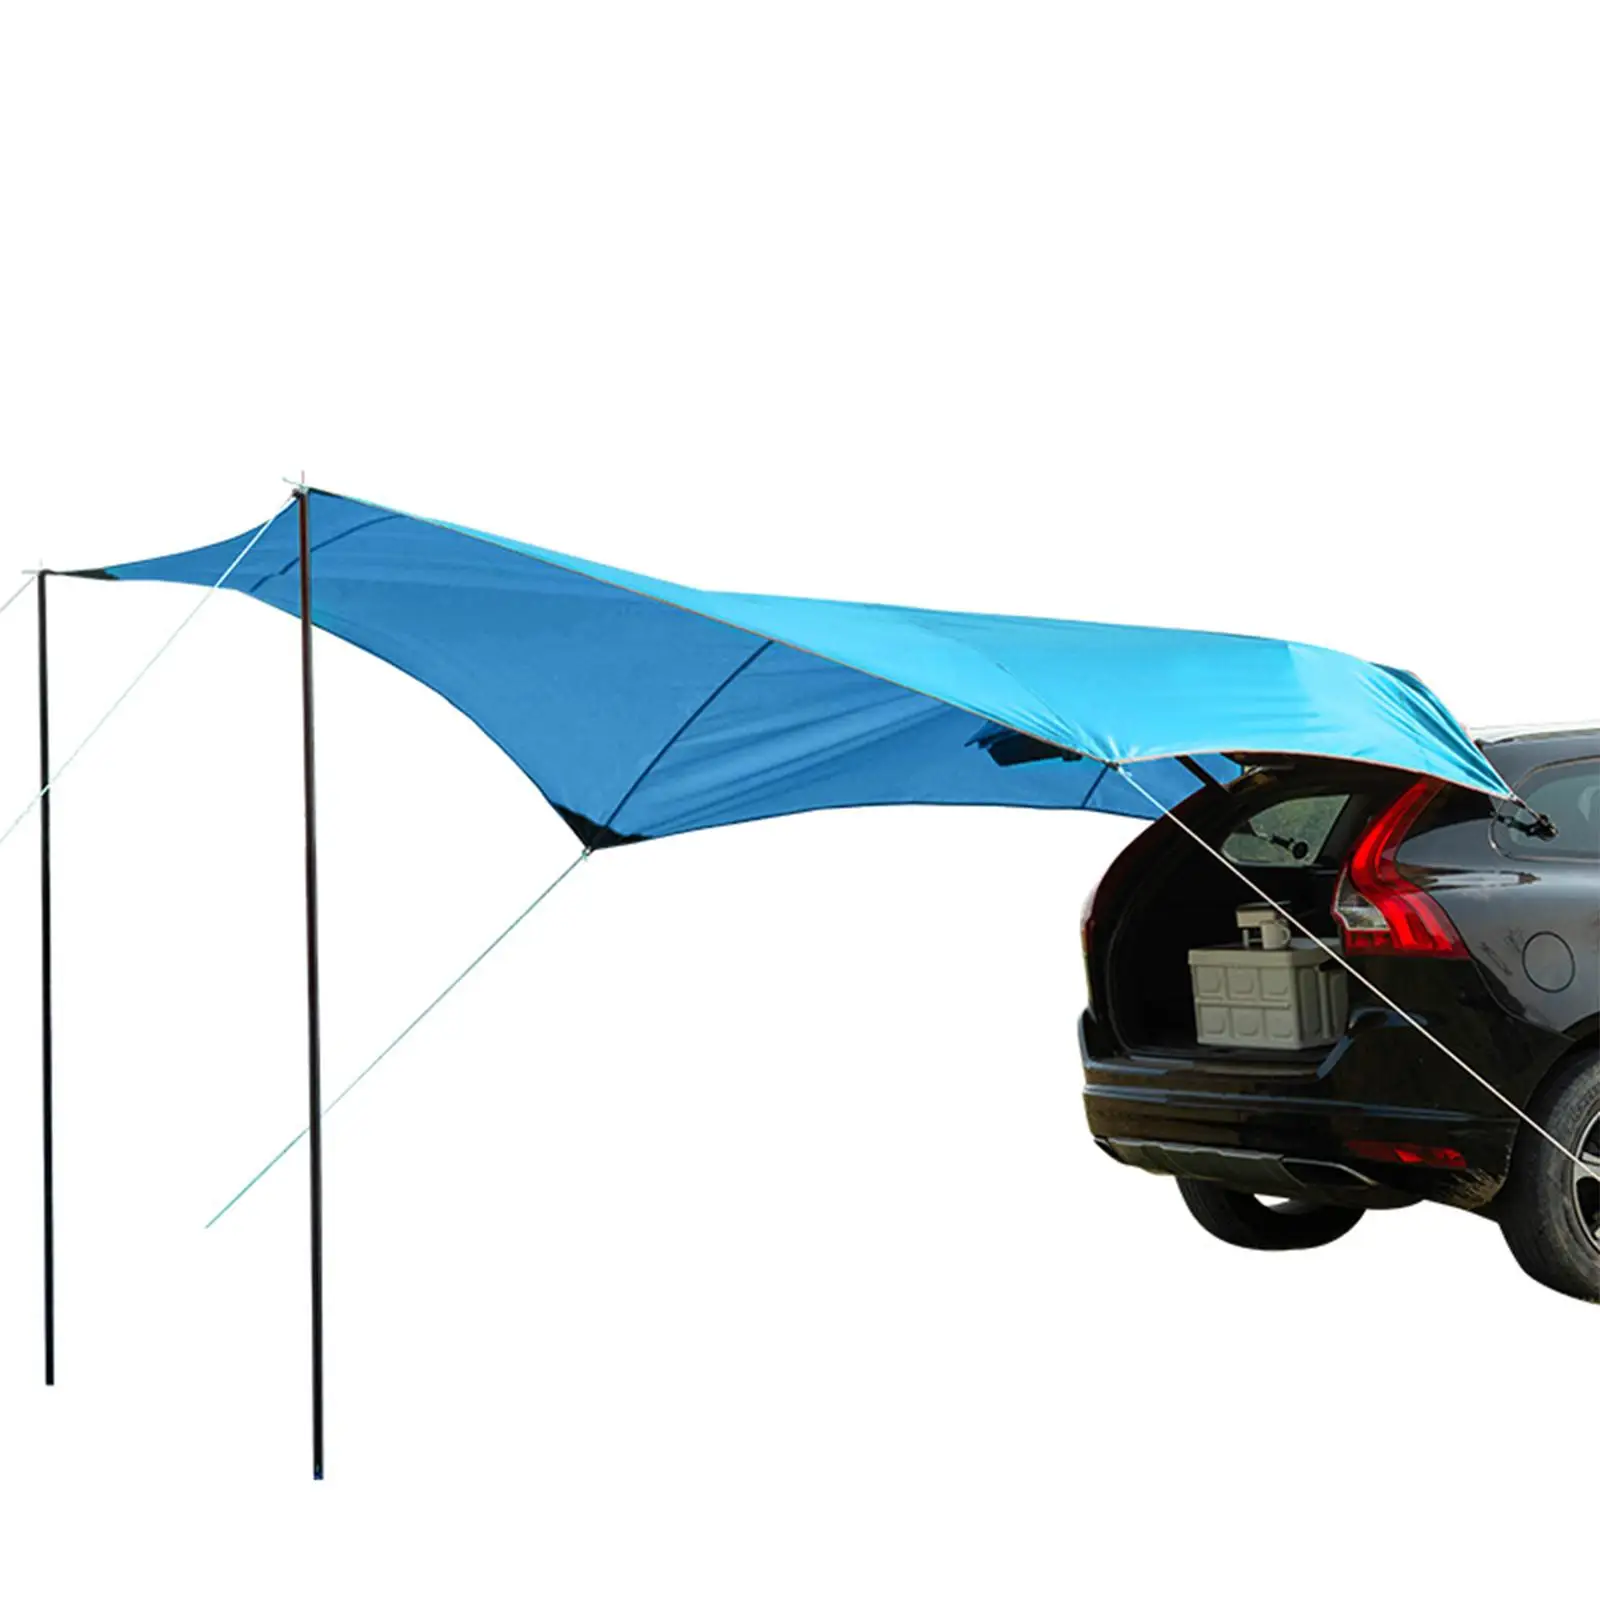 Portable Car Tent Sunshade Shelter Tailgate Shade Awning Anti UV Rainproof Tarp for Travel Fishing Self Driving Camping Picnic